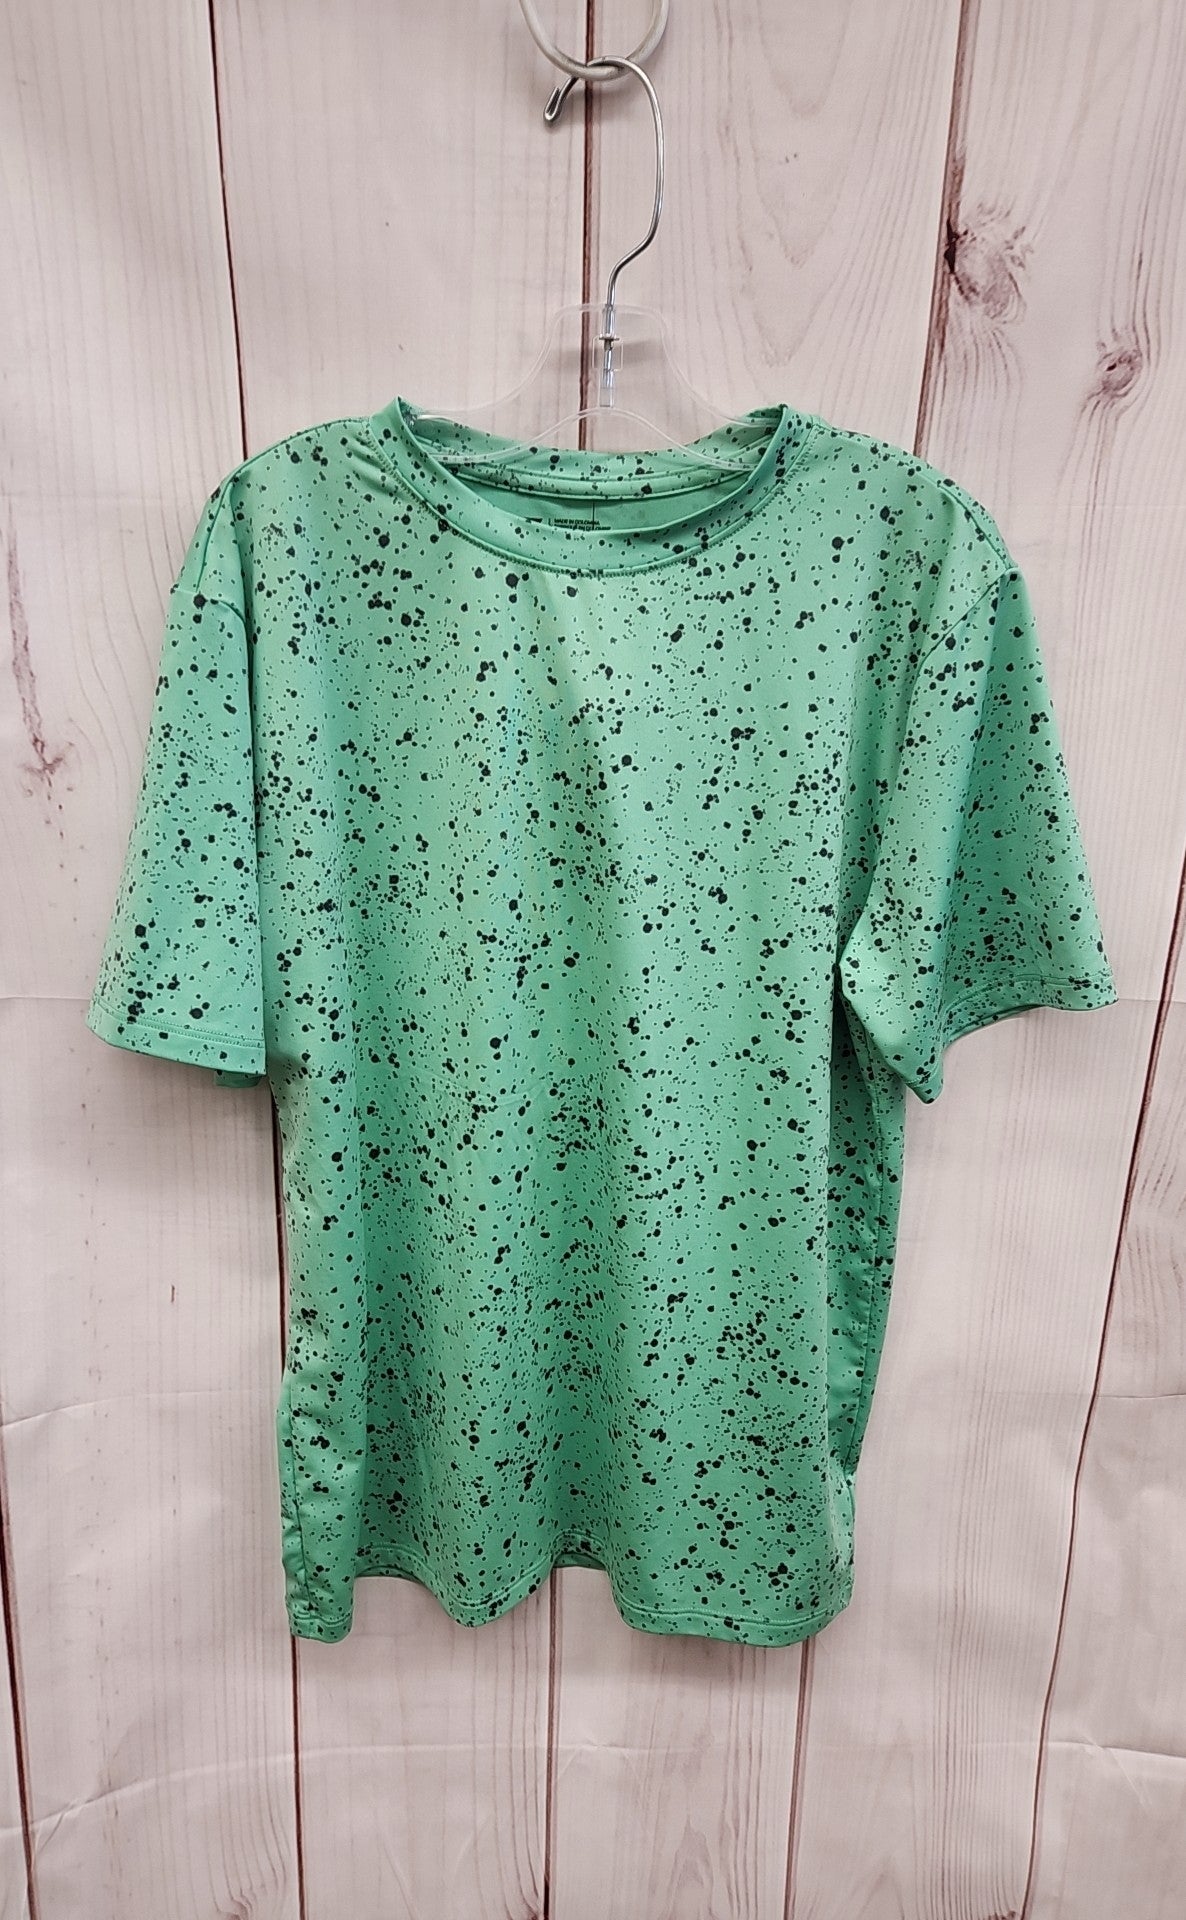 Zella Boy's Size 14/16 Green Shirt